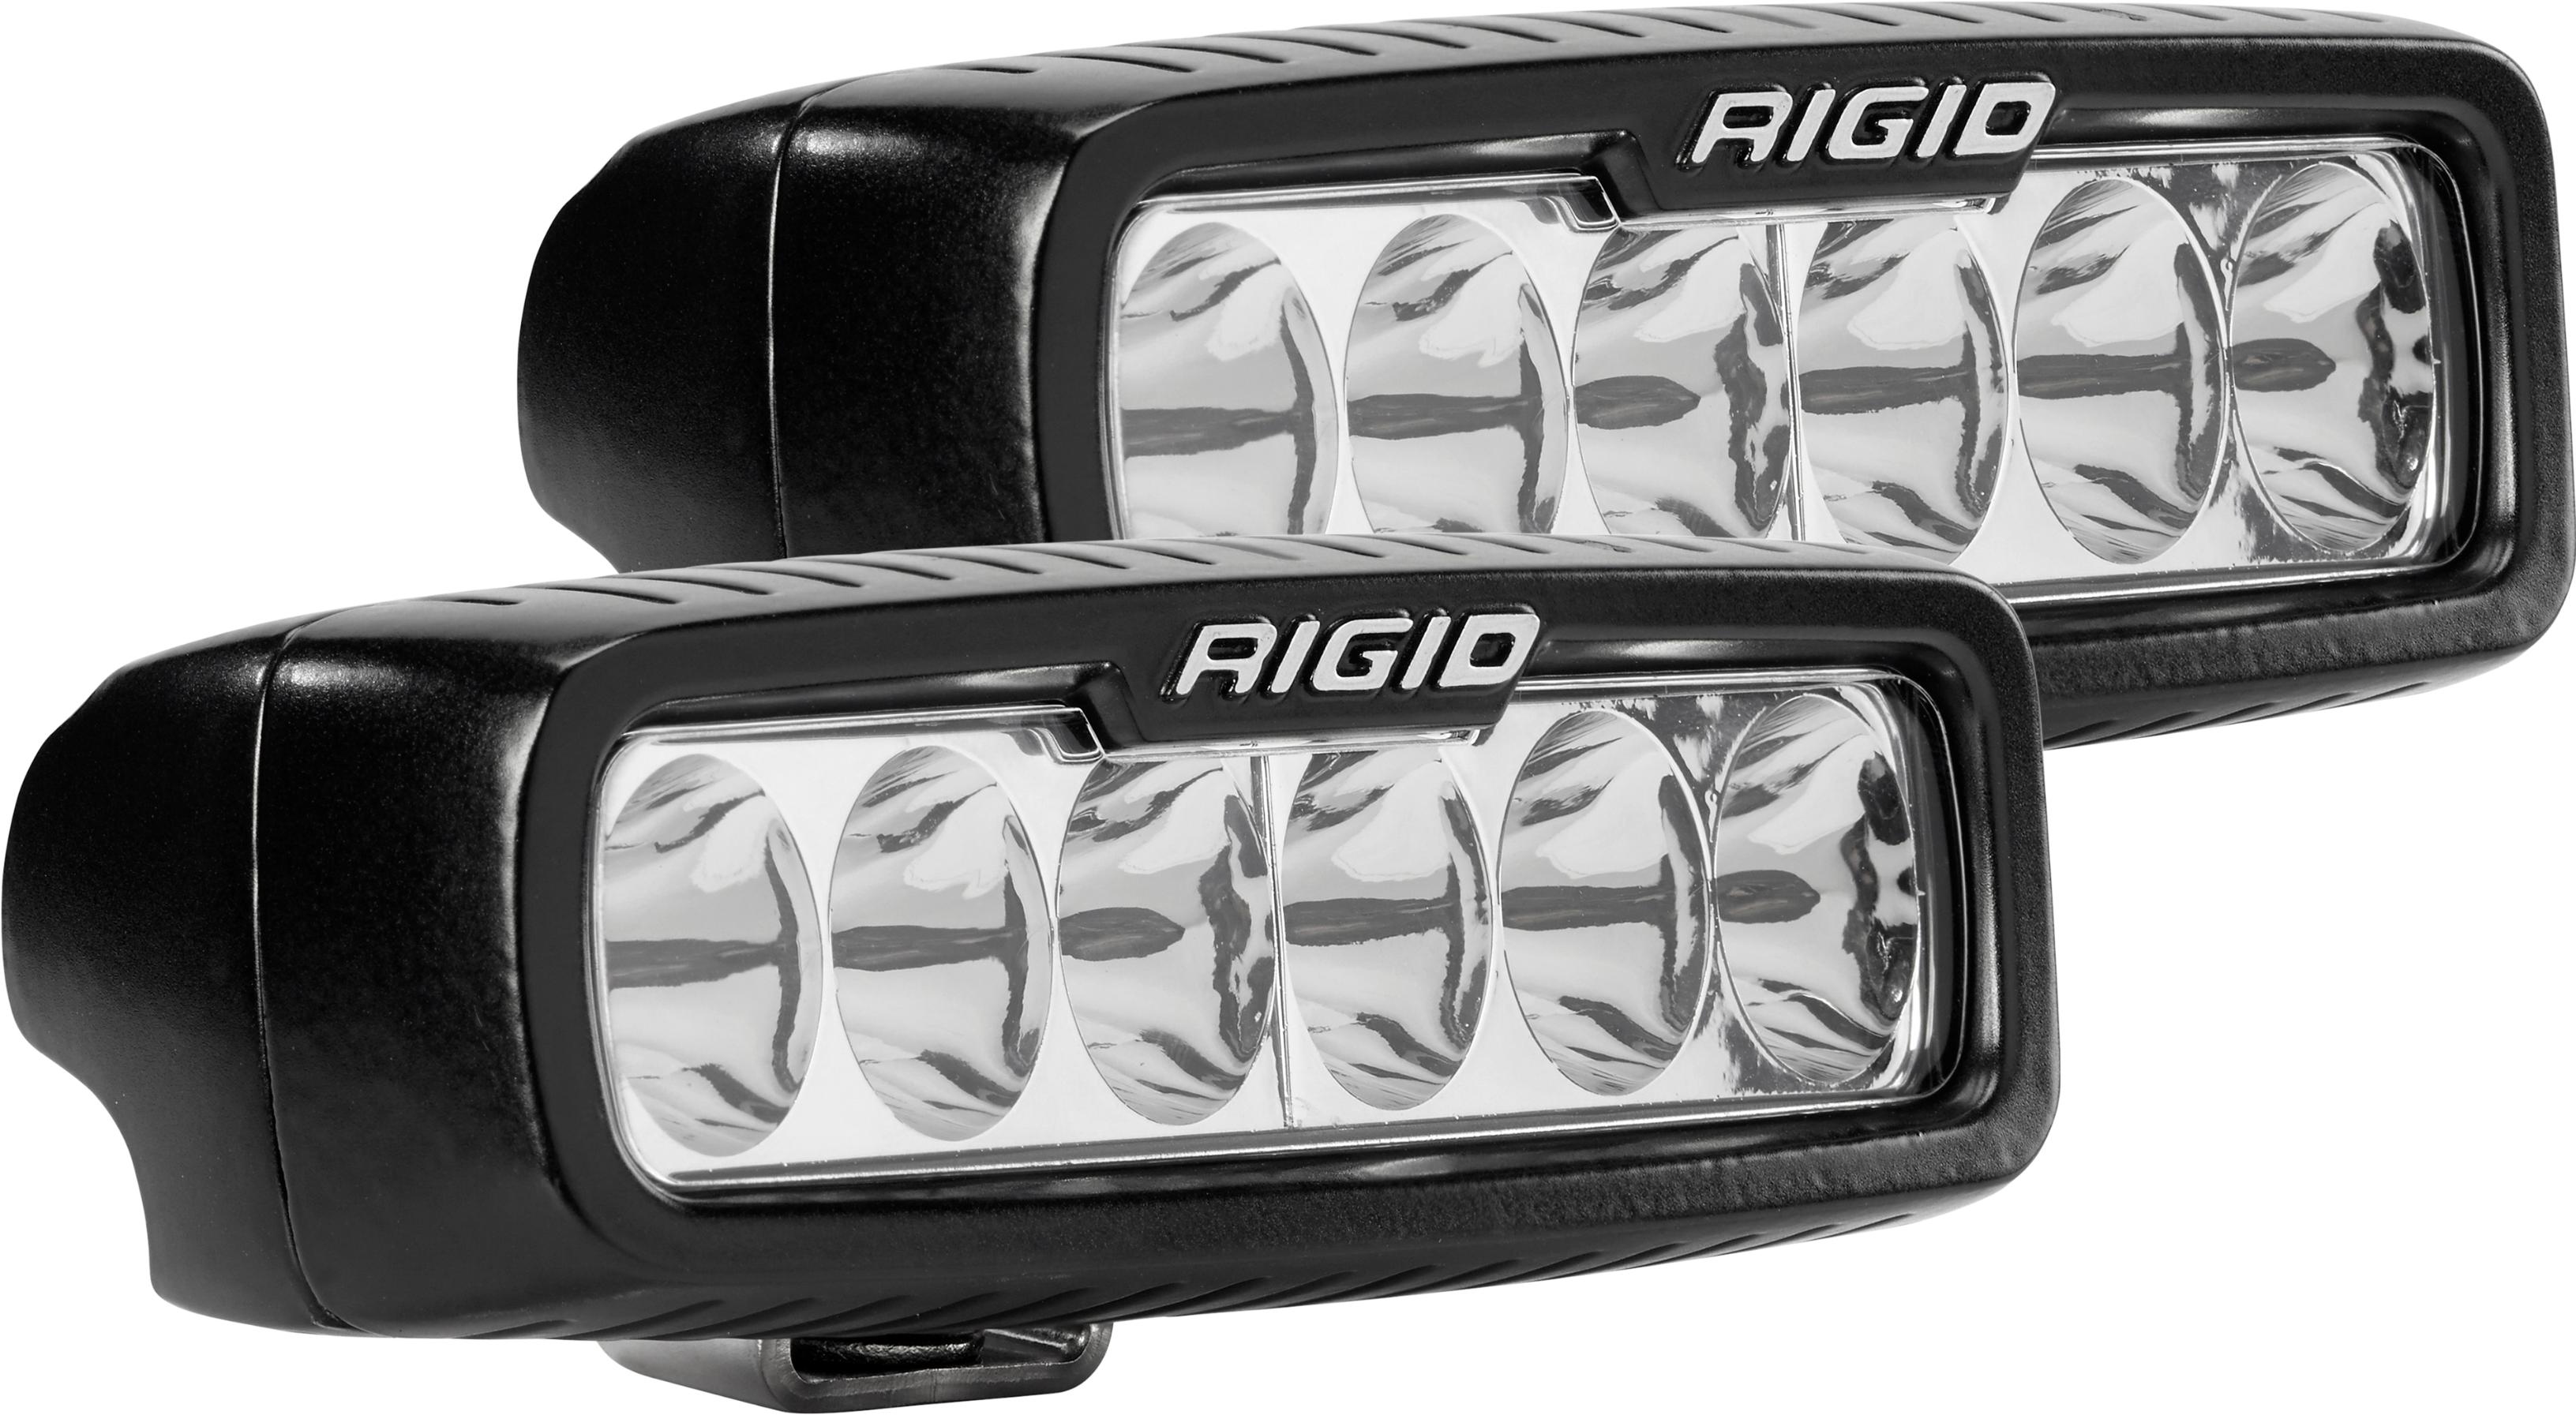 Rigid - Sr-q Pro Driving Standard Mount Light Pair - 915313